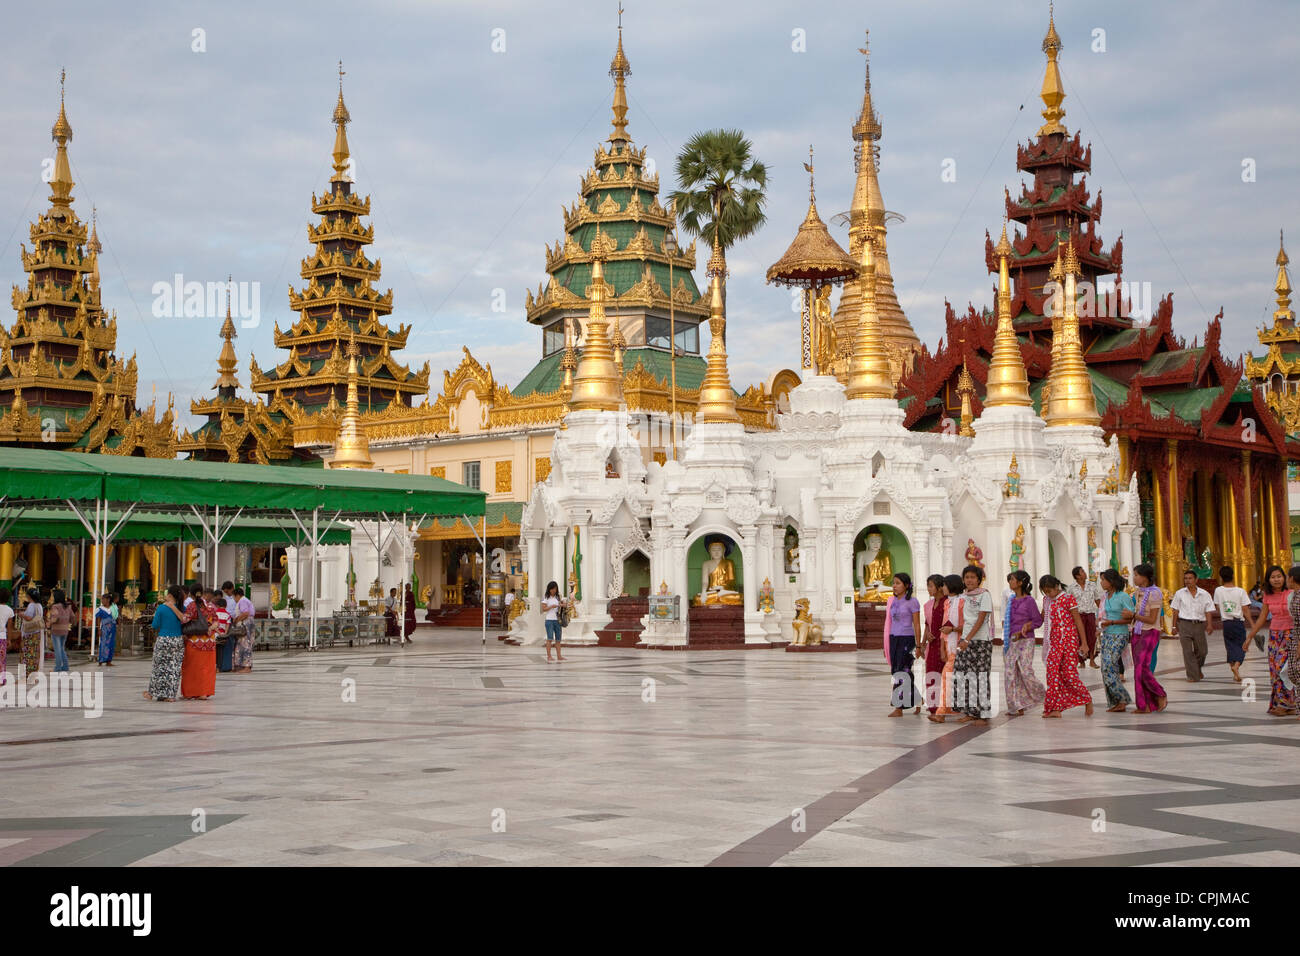 Myanmar, Burma. Shwedagon Pagoda, Yangon, Rangoon. Many shrines encircle the walkway around the main stupa. Stock Photo